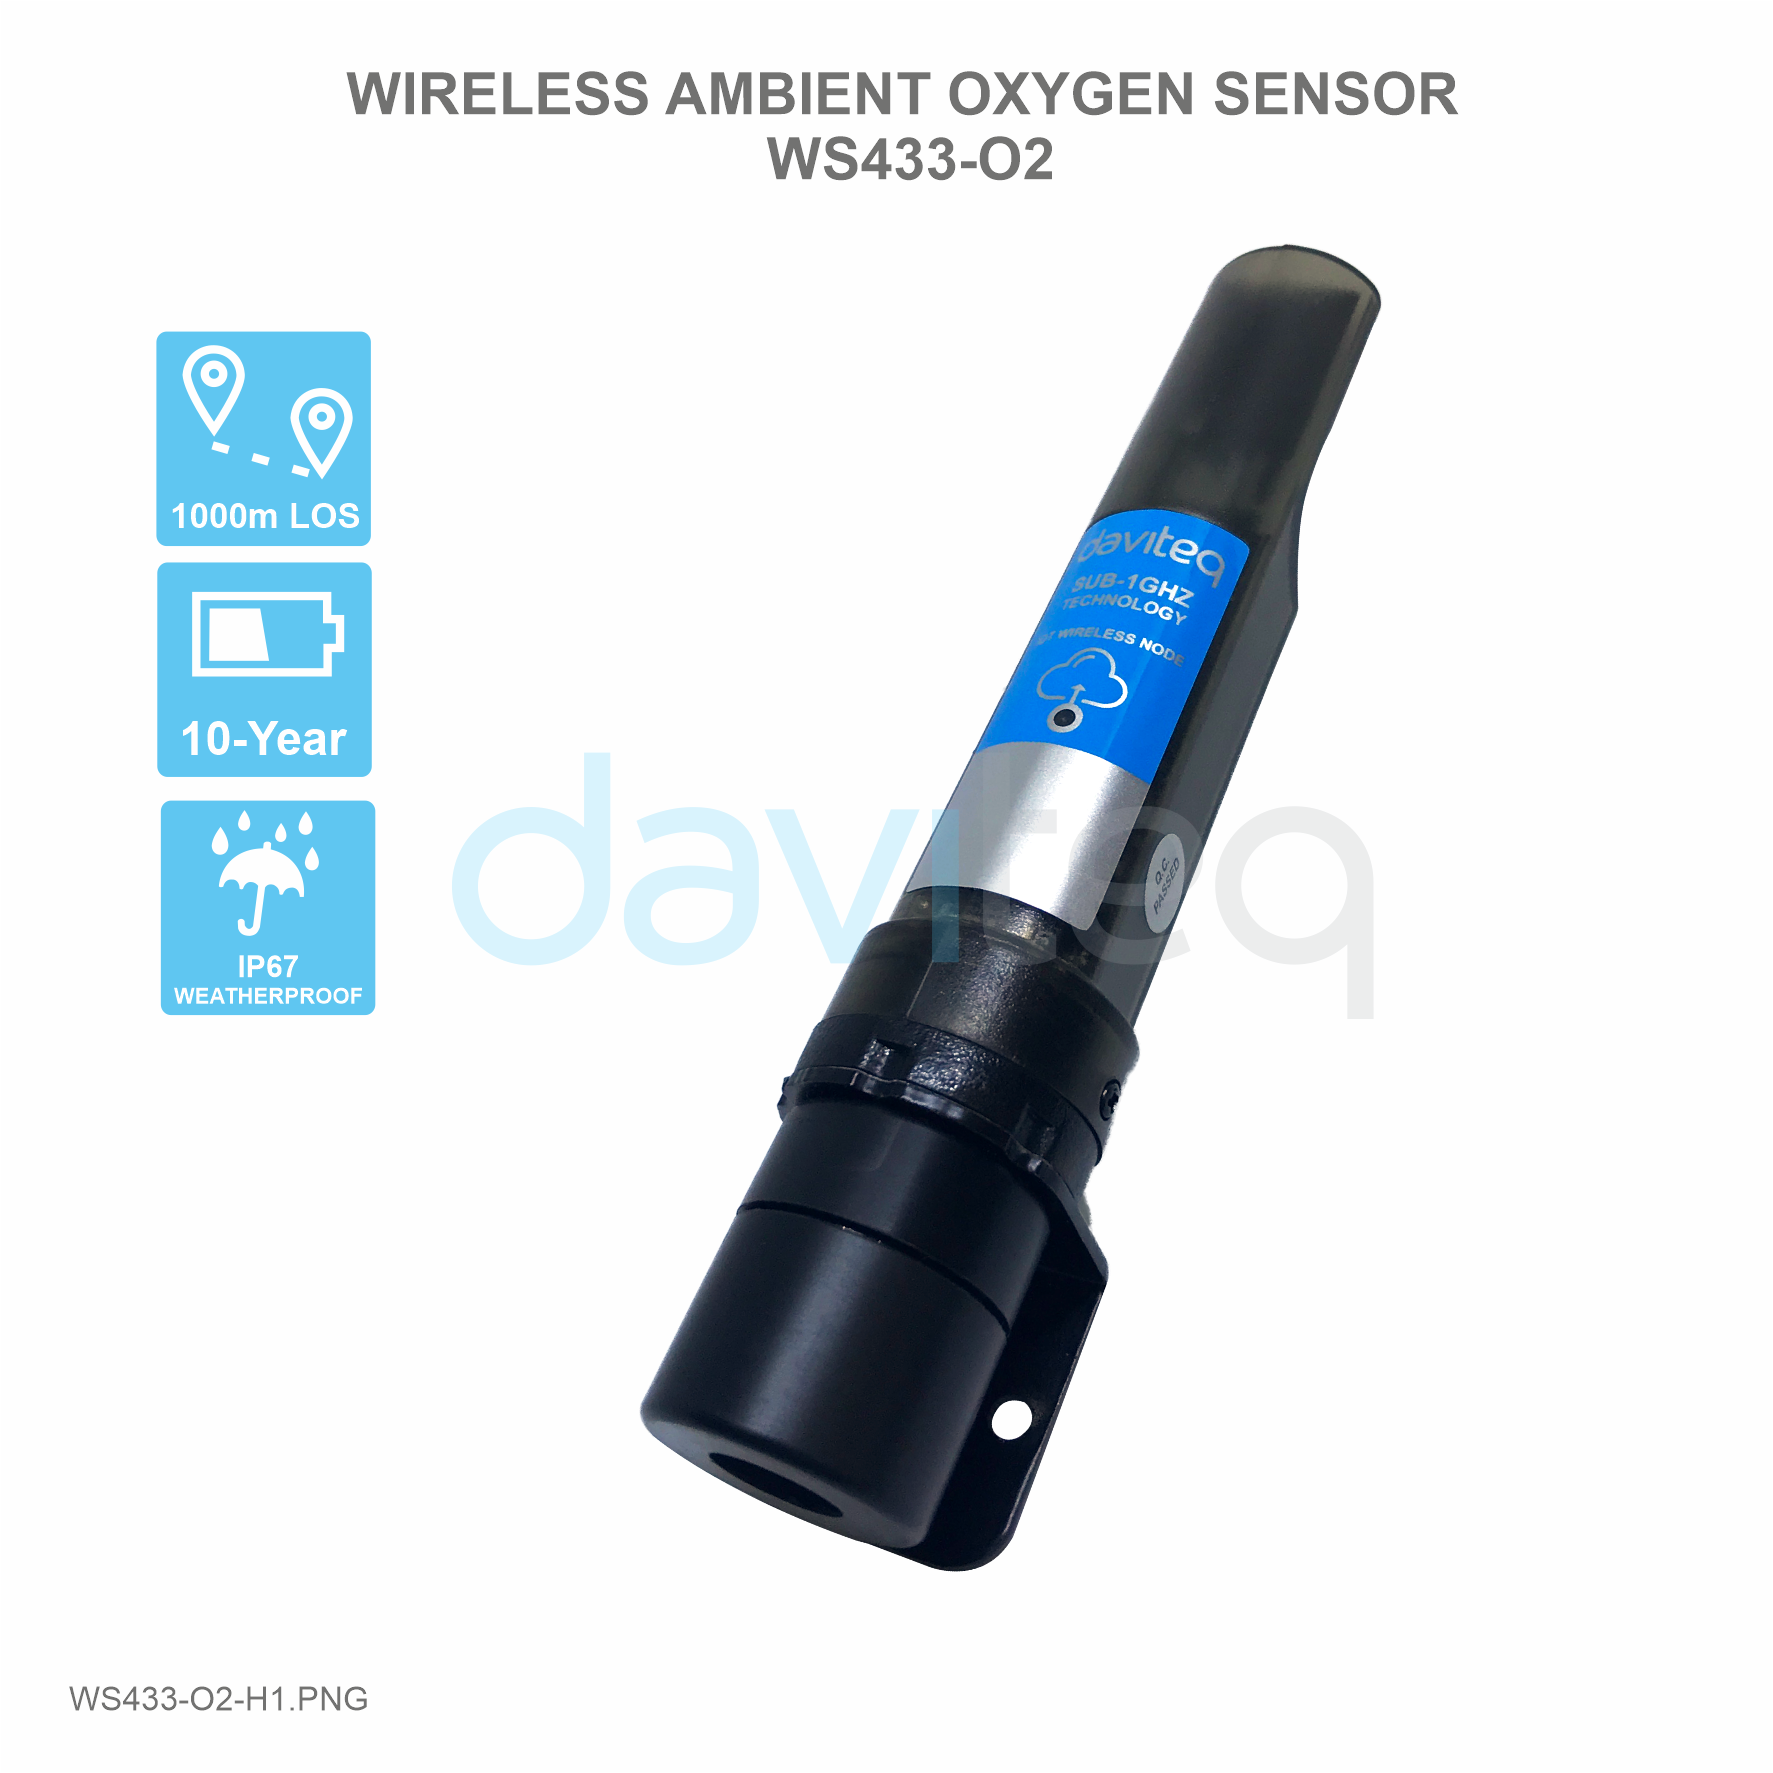 Wireless Ambient Oxygen Sensor